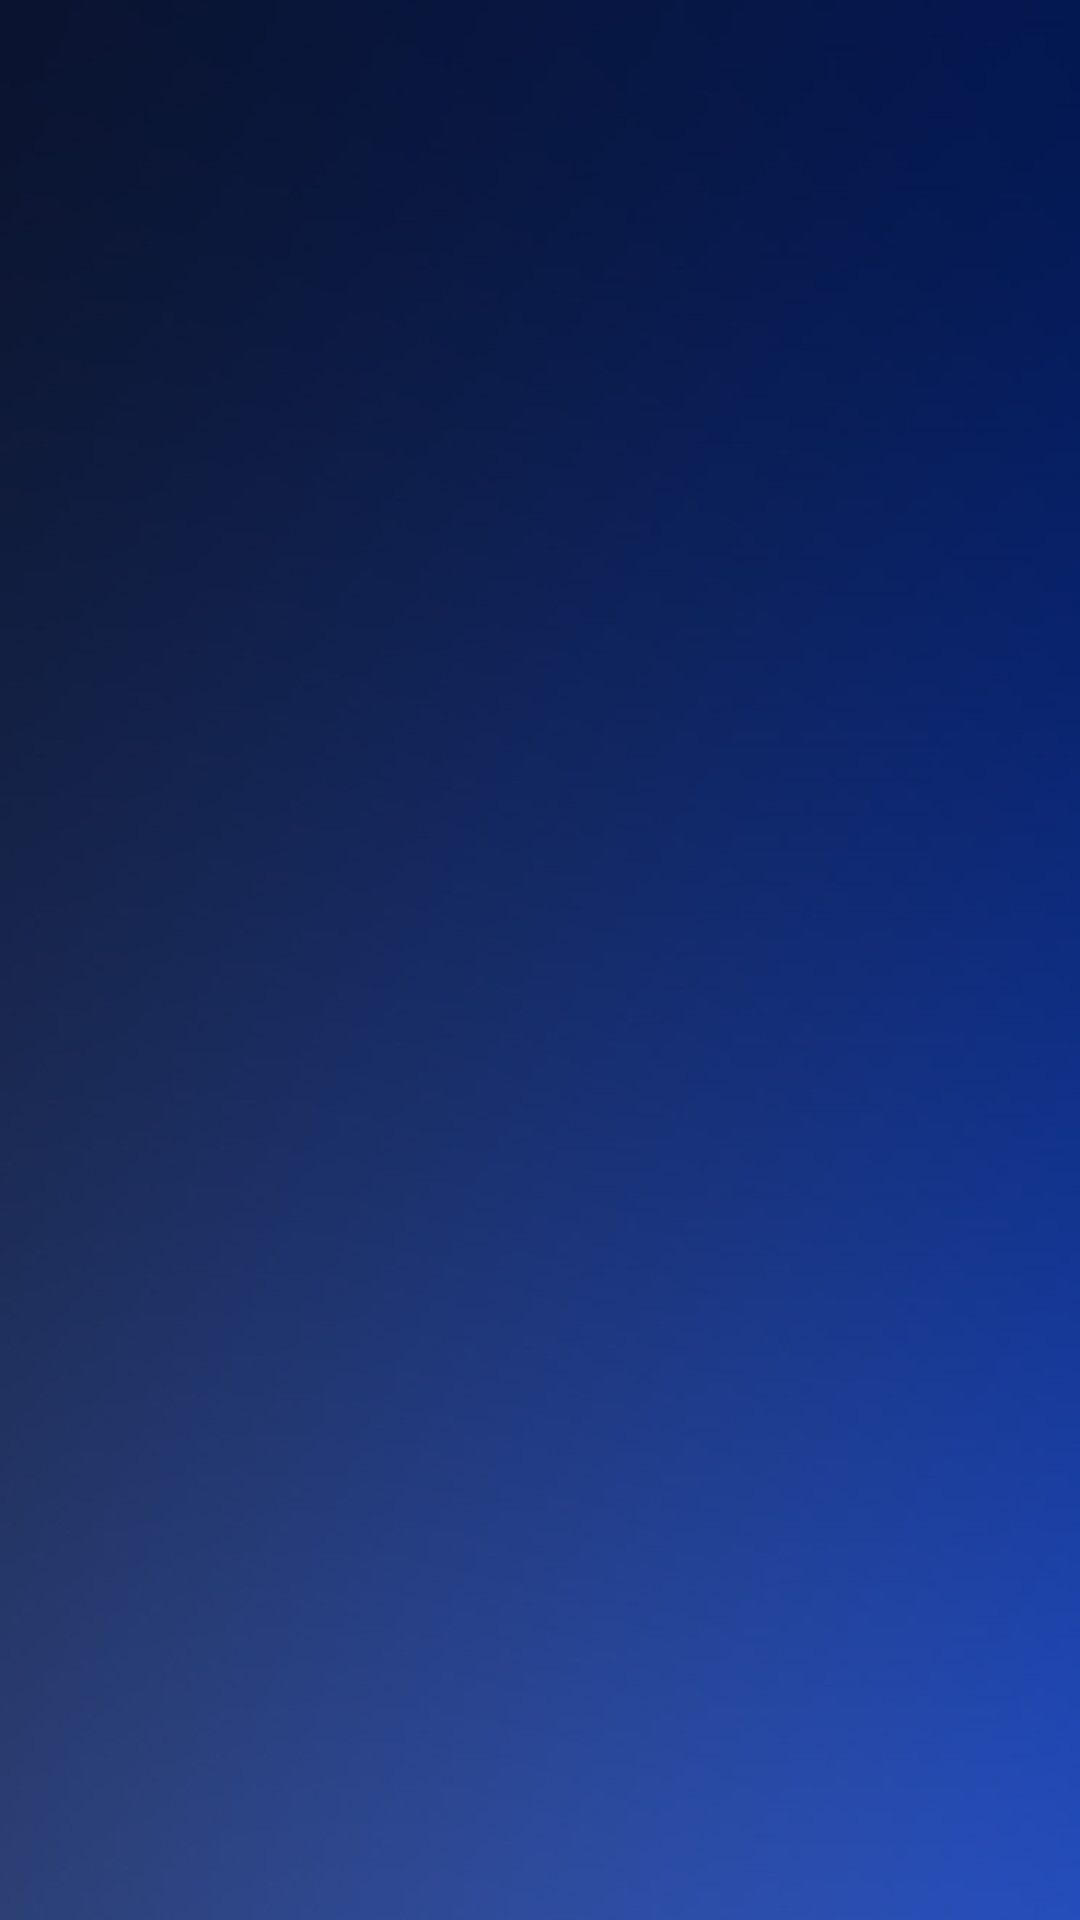 Pure Dark Blue Ocean Gradation Blur Background iPhone Wallpaper HD Android HD Wallpaper